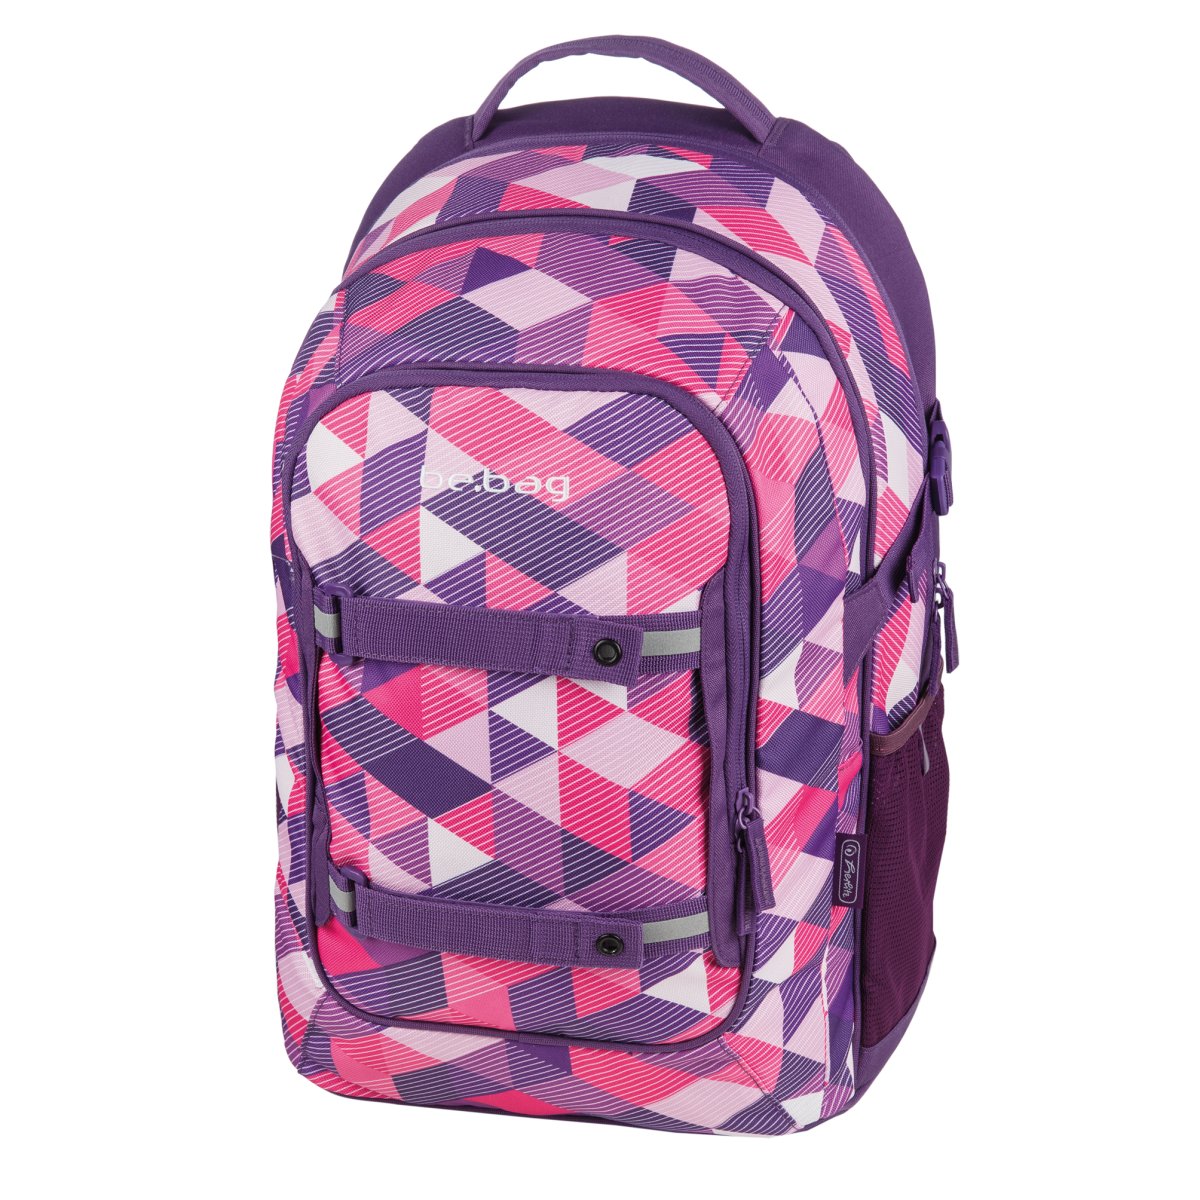 school backpack be.bag Herlitz Purple - Checked beat